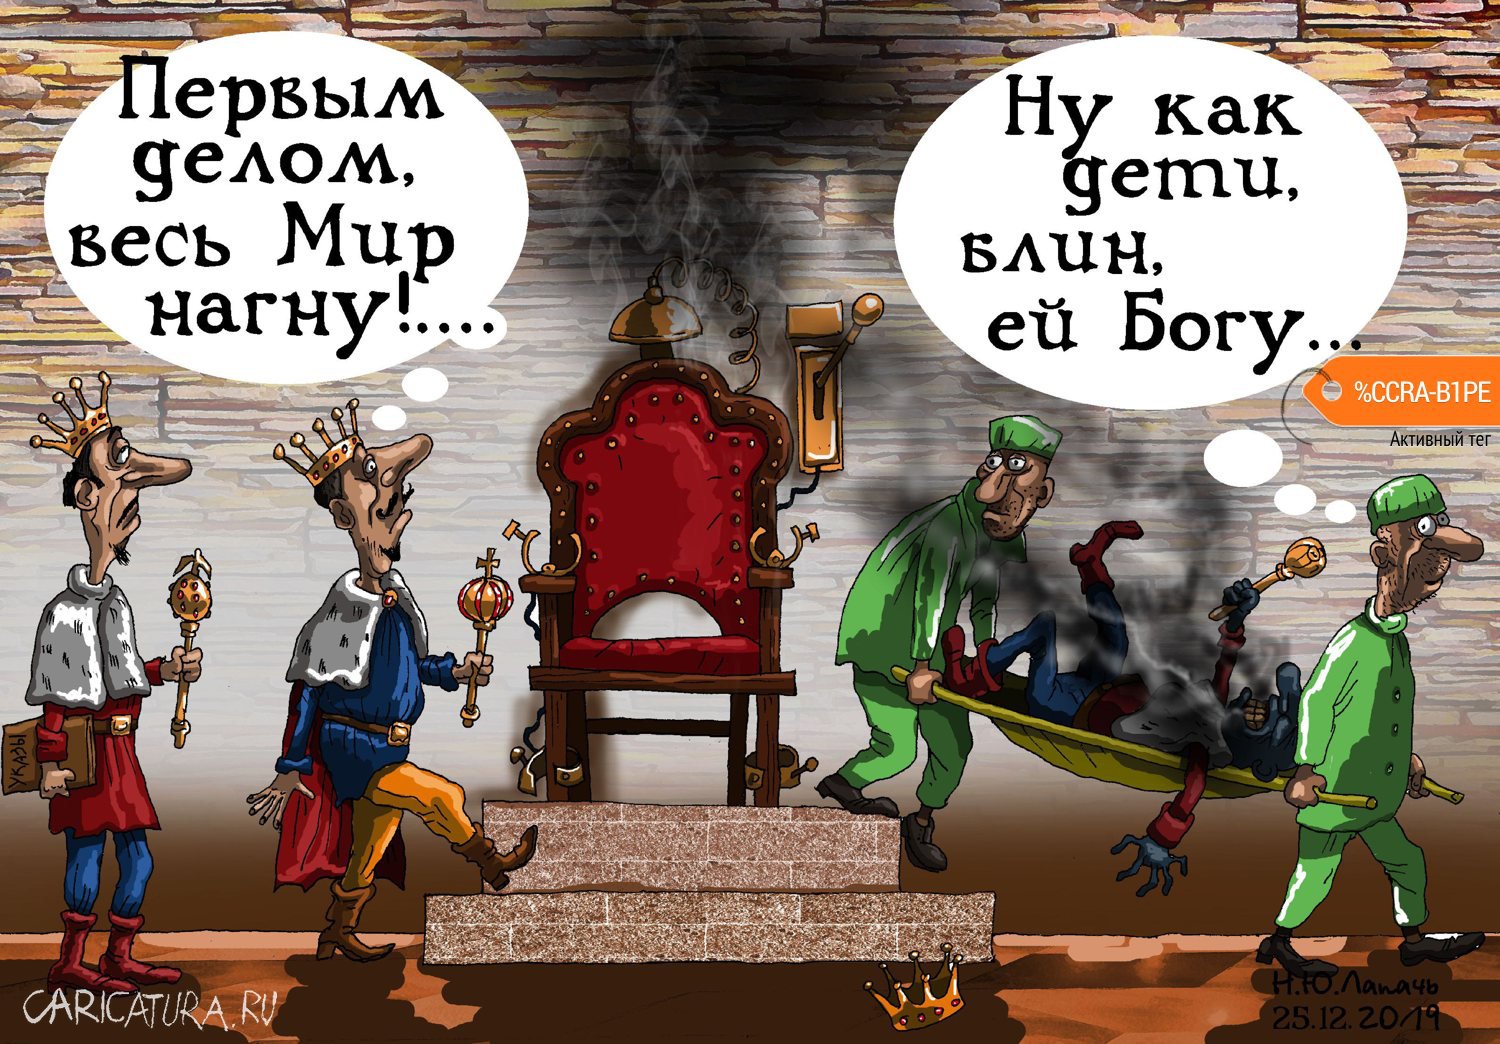 Карикатура "Битва Престолов", Теплый Телогрей